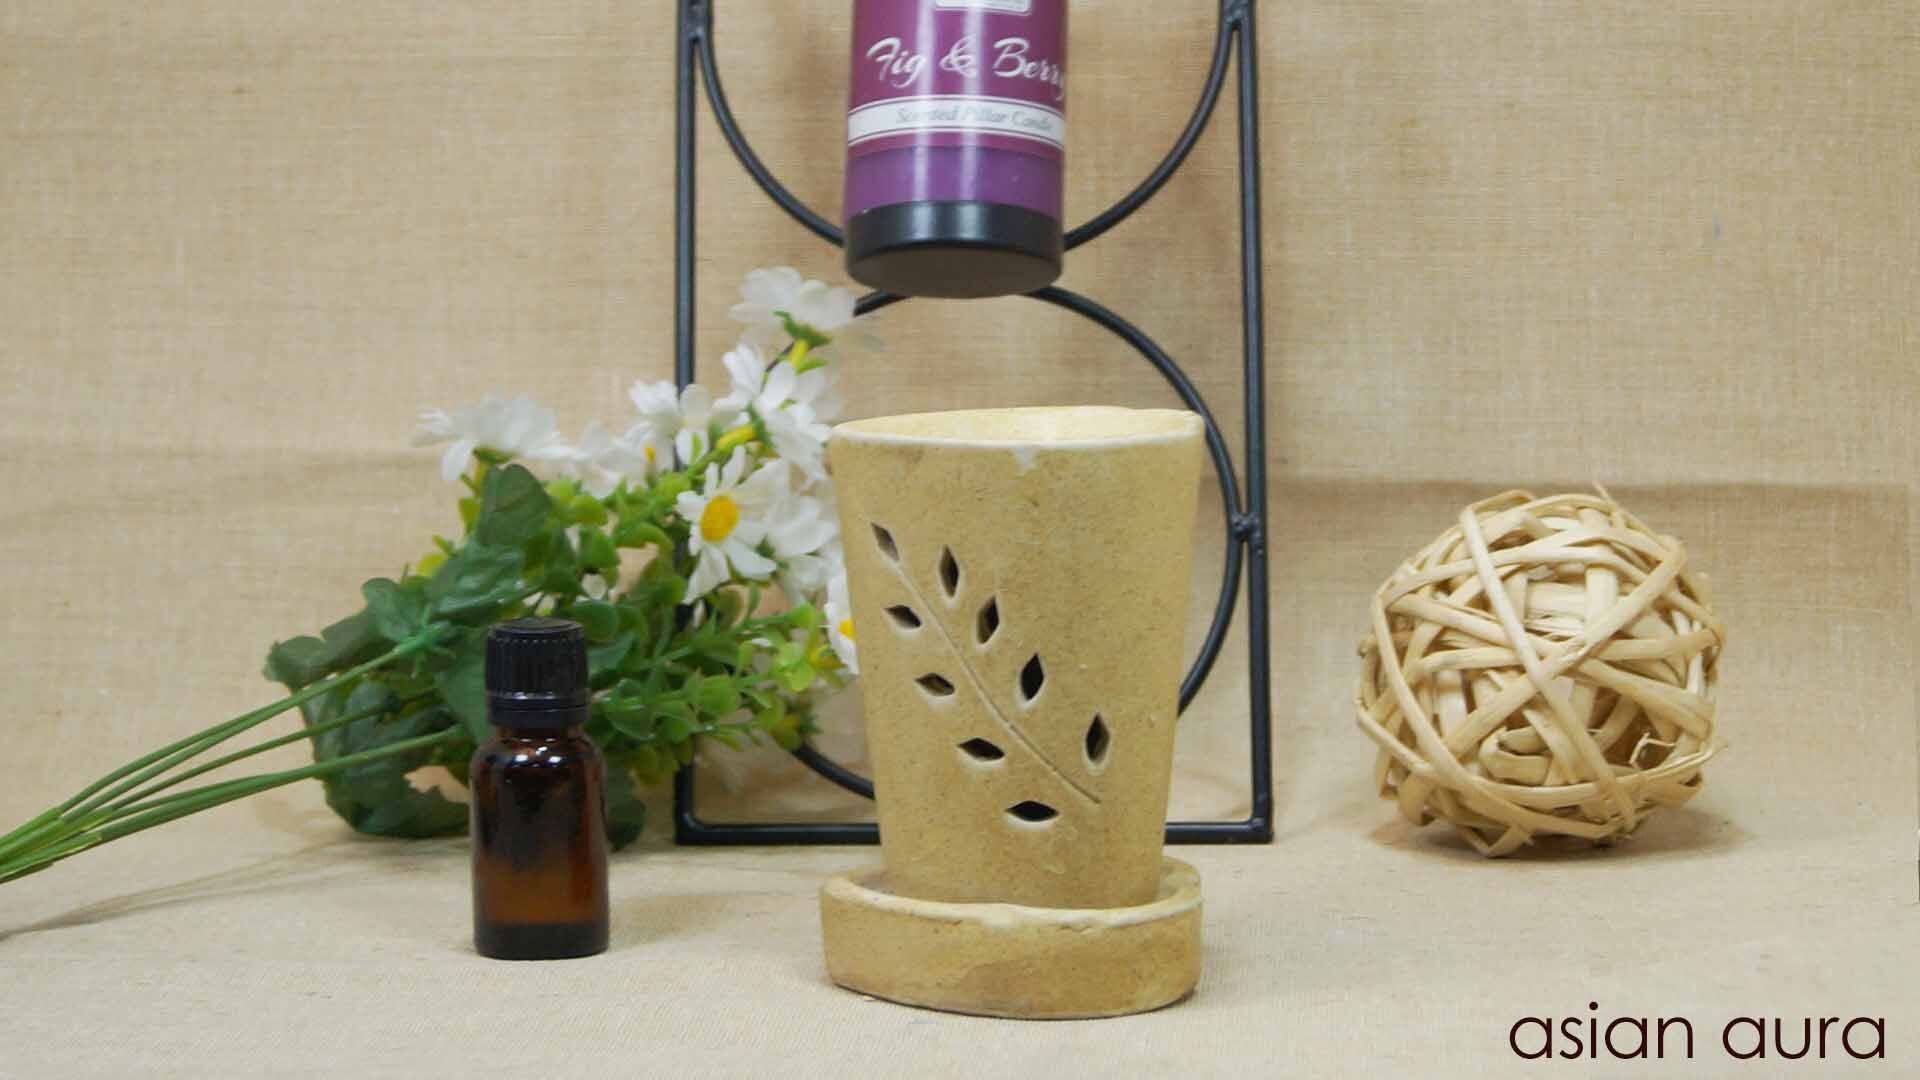 Asian Aura Ceramic Aromatic Oil Diffuser with 2 oil bottles AAEB 0012-B